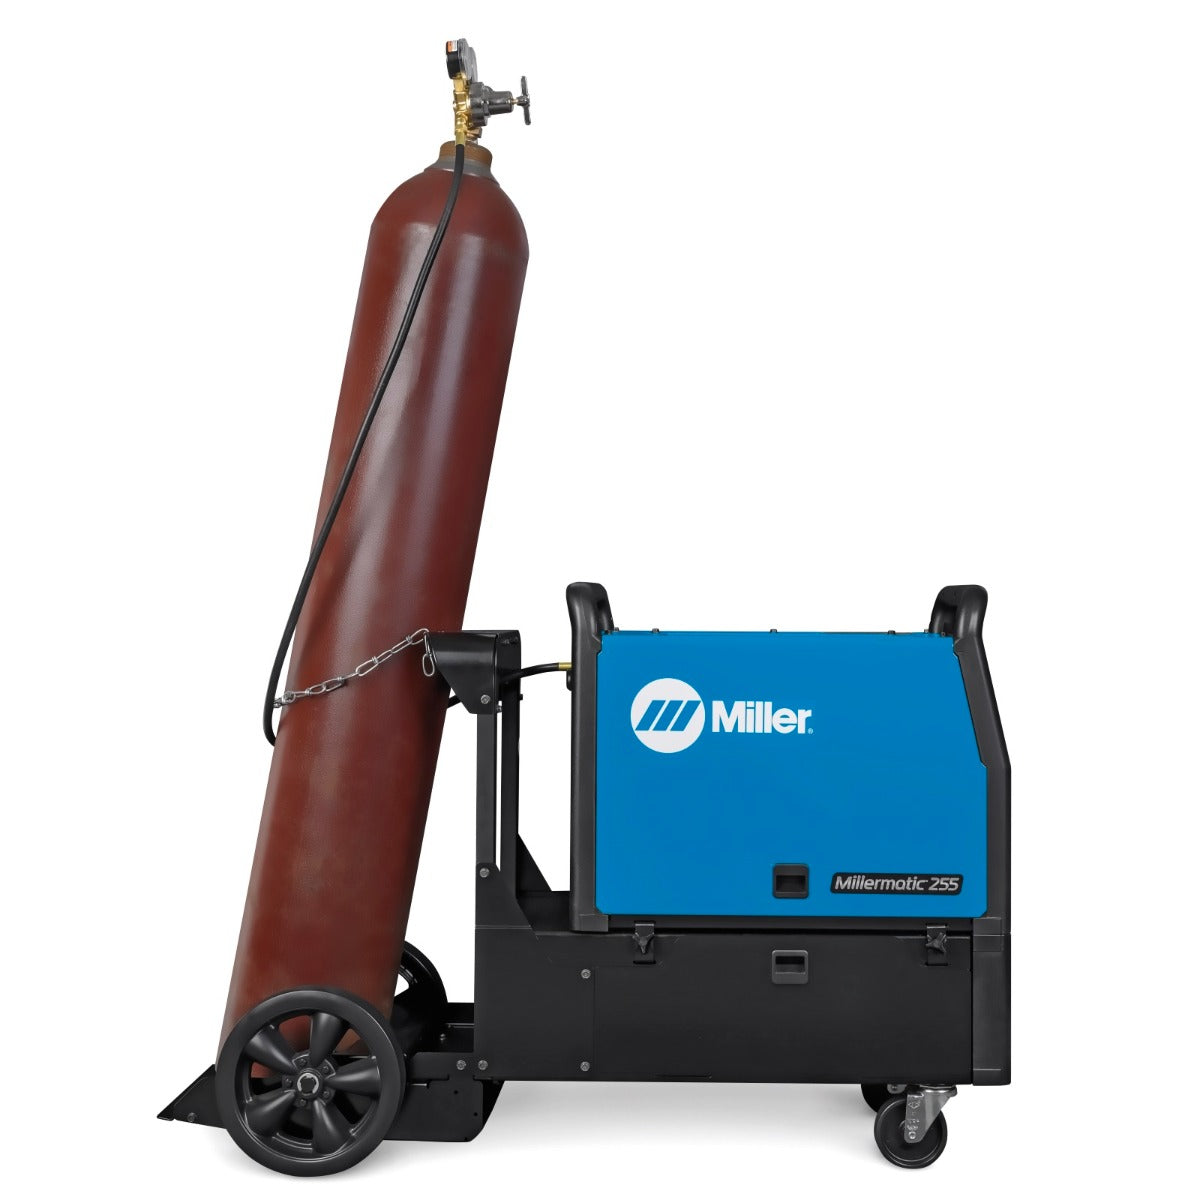 Miller Millermatic 255 MIG/Pulsed MIG Welder- 208/240V with Running Gear (951766)